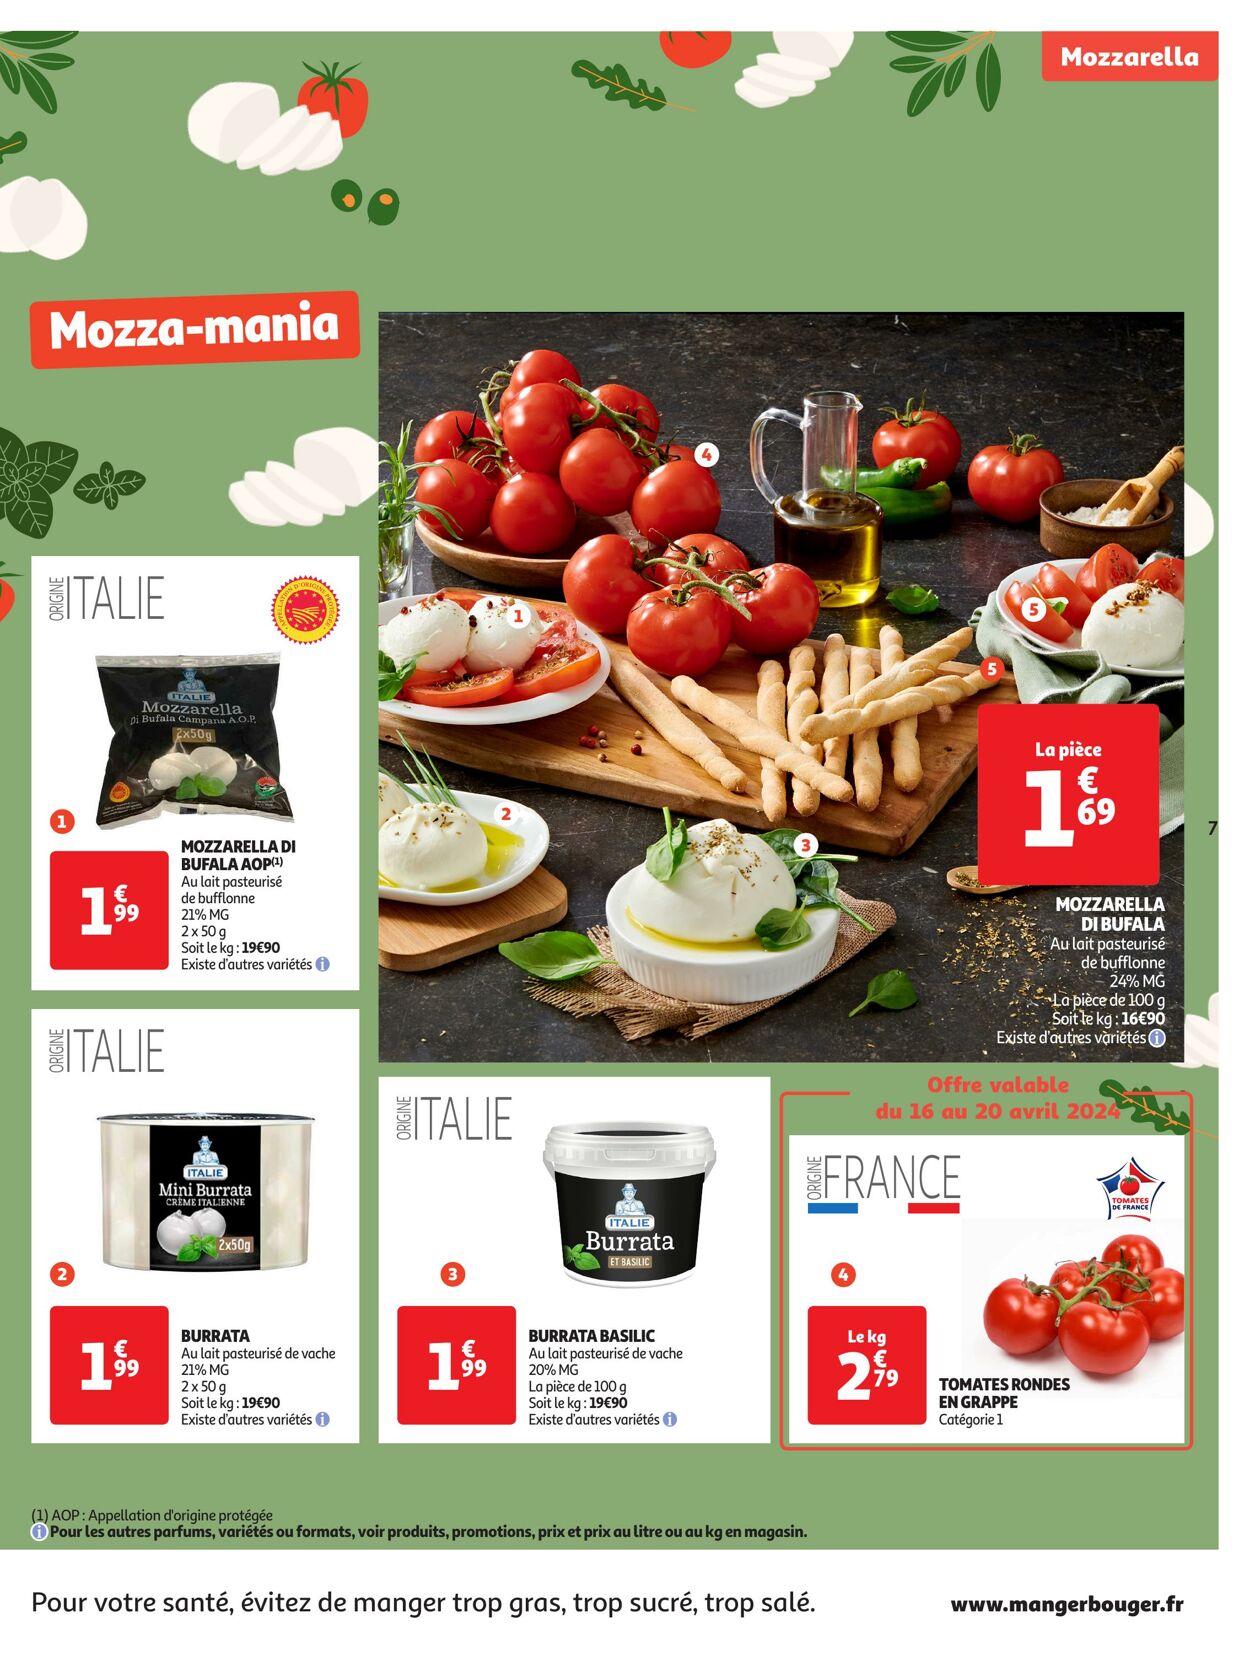 Catalogue Auchan 16.04.2024 - 21.04.2024